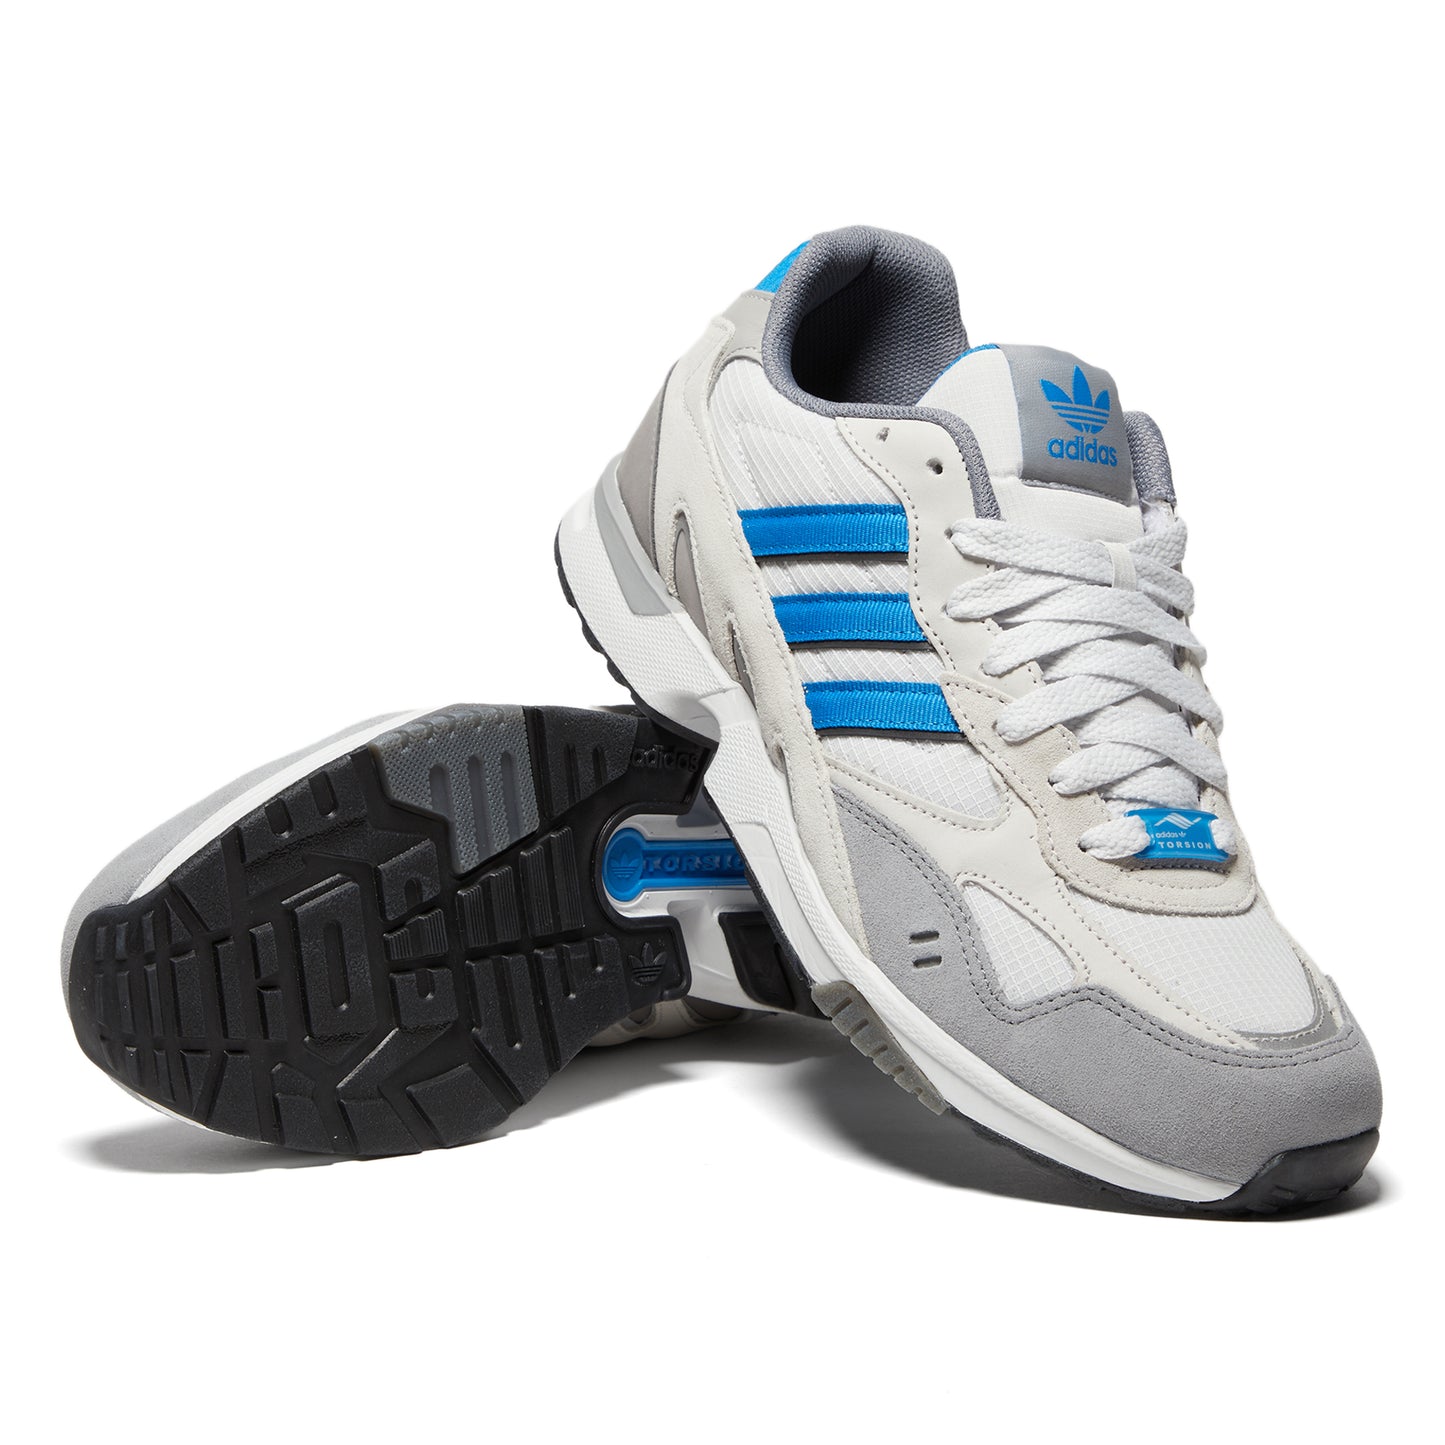 Adidas Torsion Super (White/Blue/Grey)